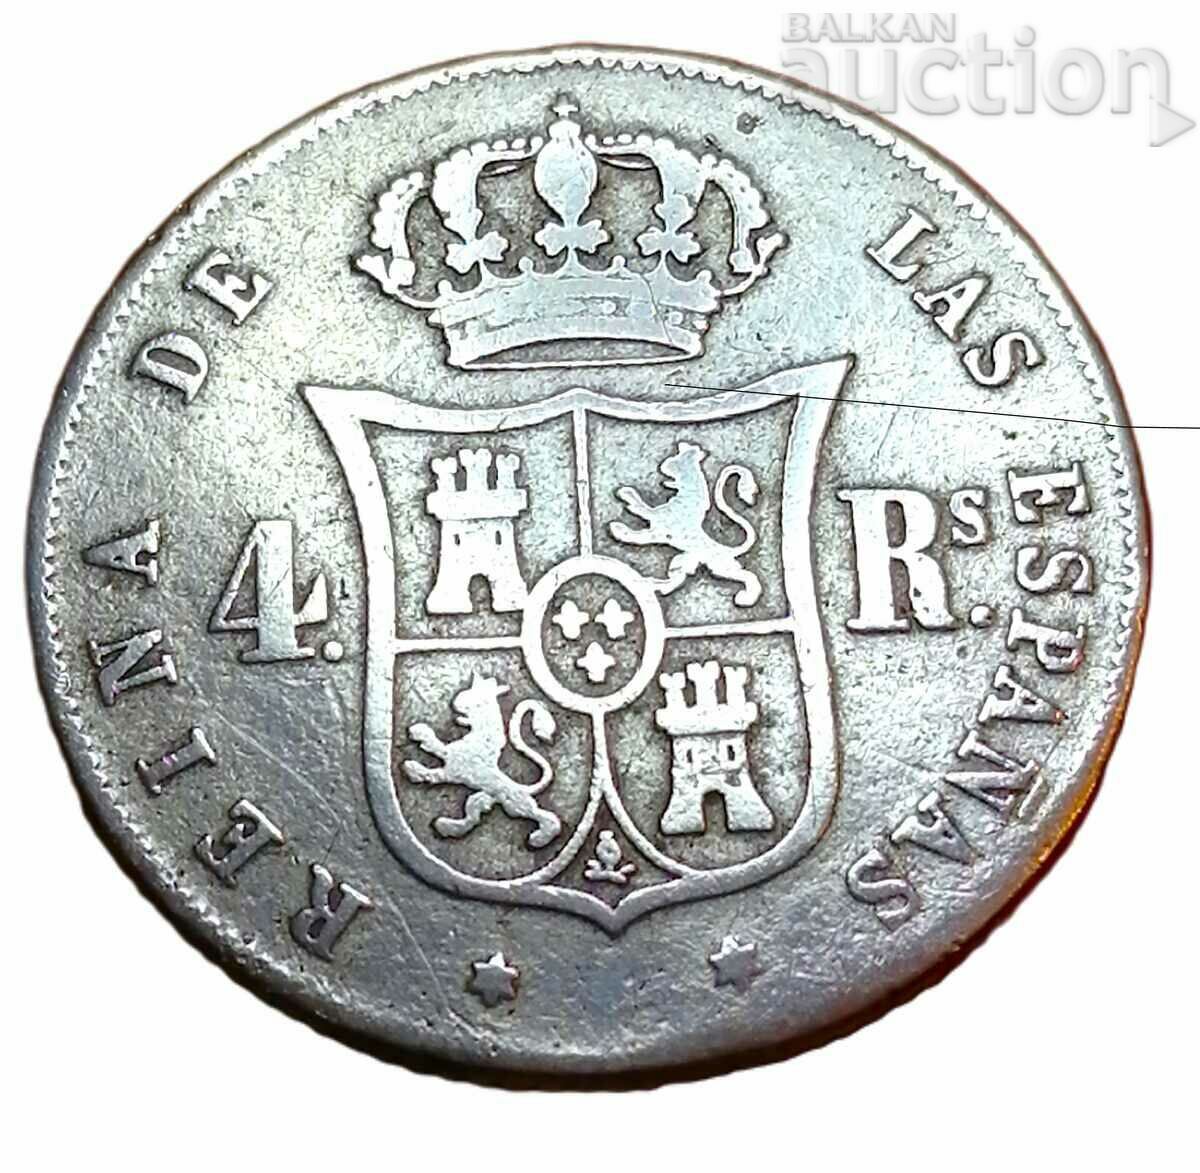 4 Reales 1862, Spania - Isabel II, an rar.